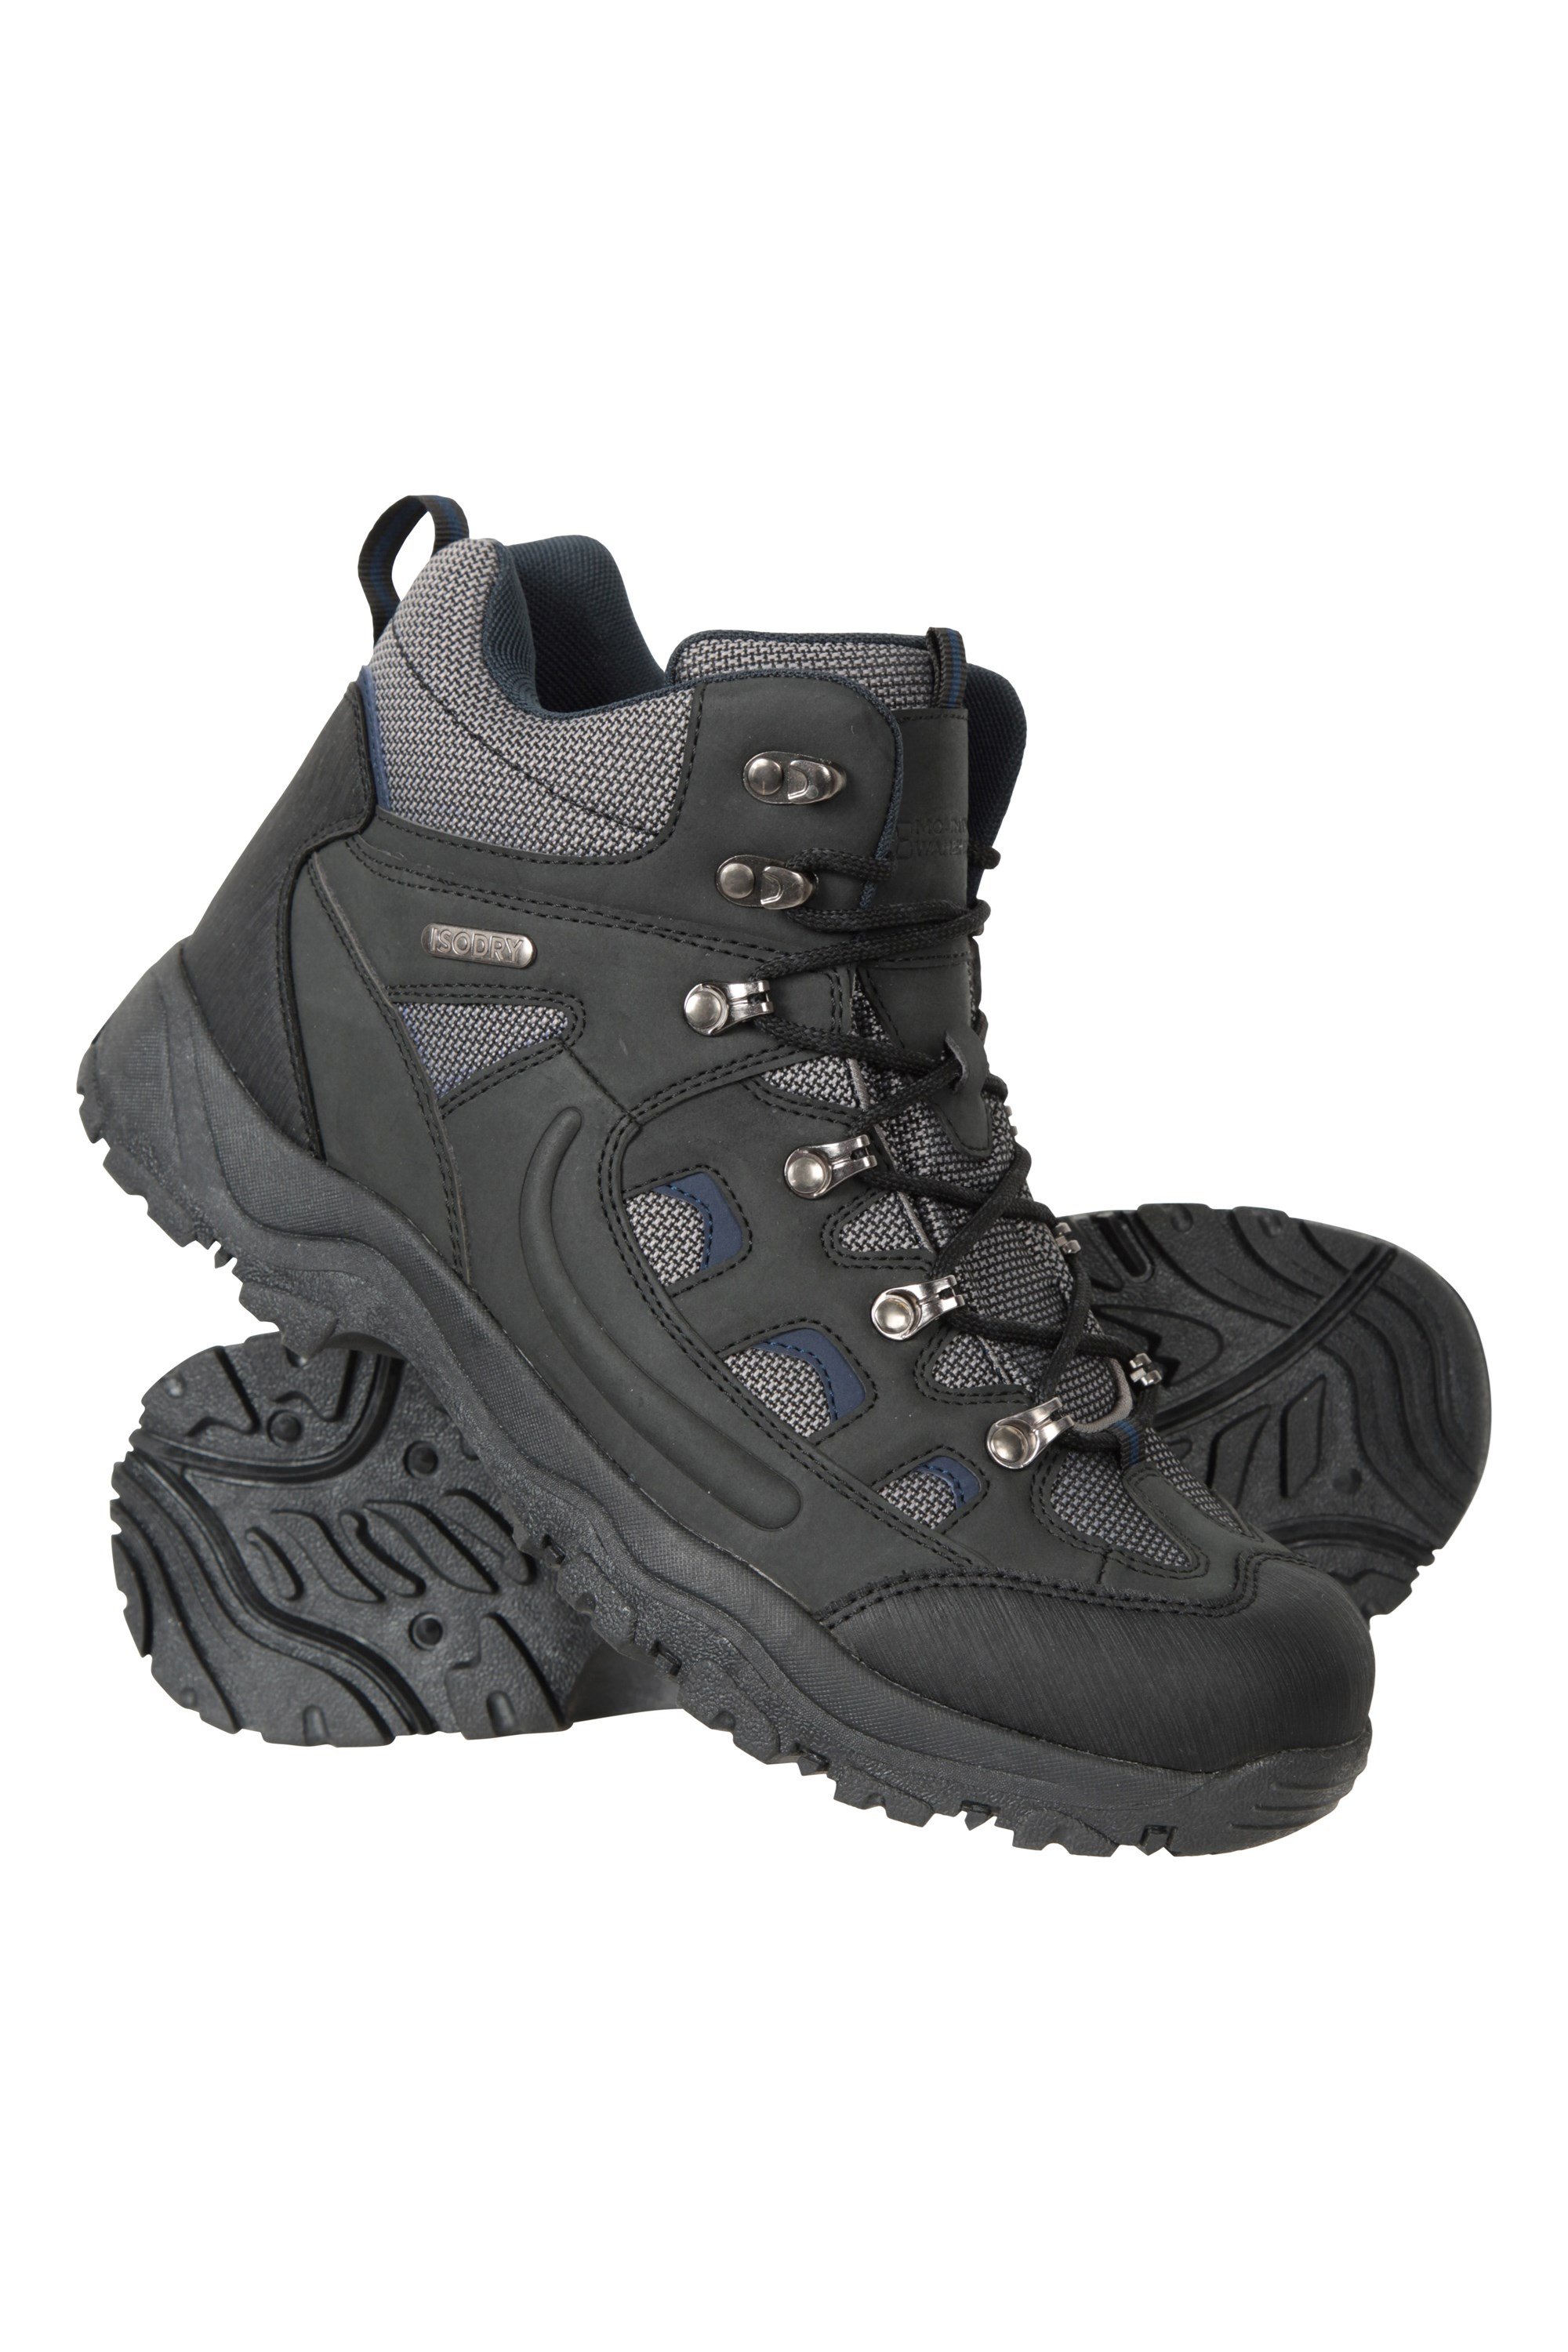 Mens Mountain Warehouse Adventurer Waterproof Boots - Mens - Black